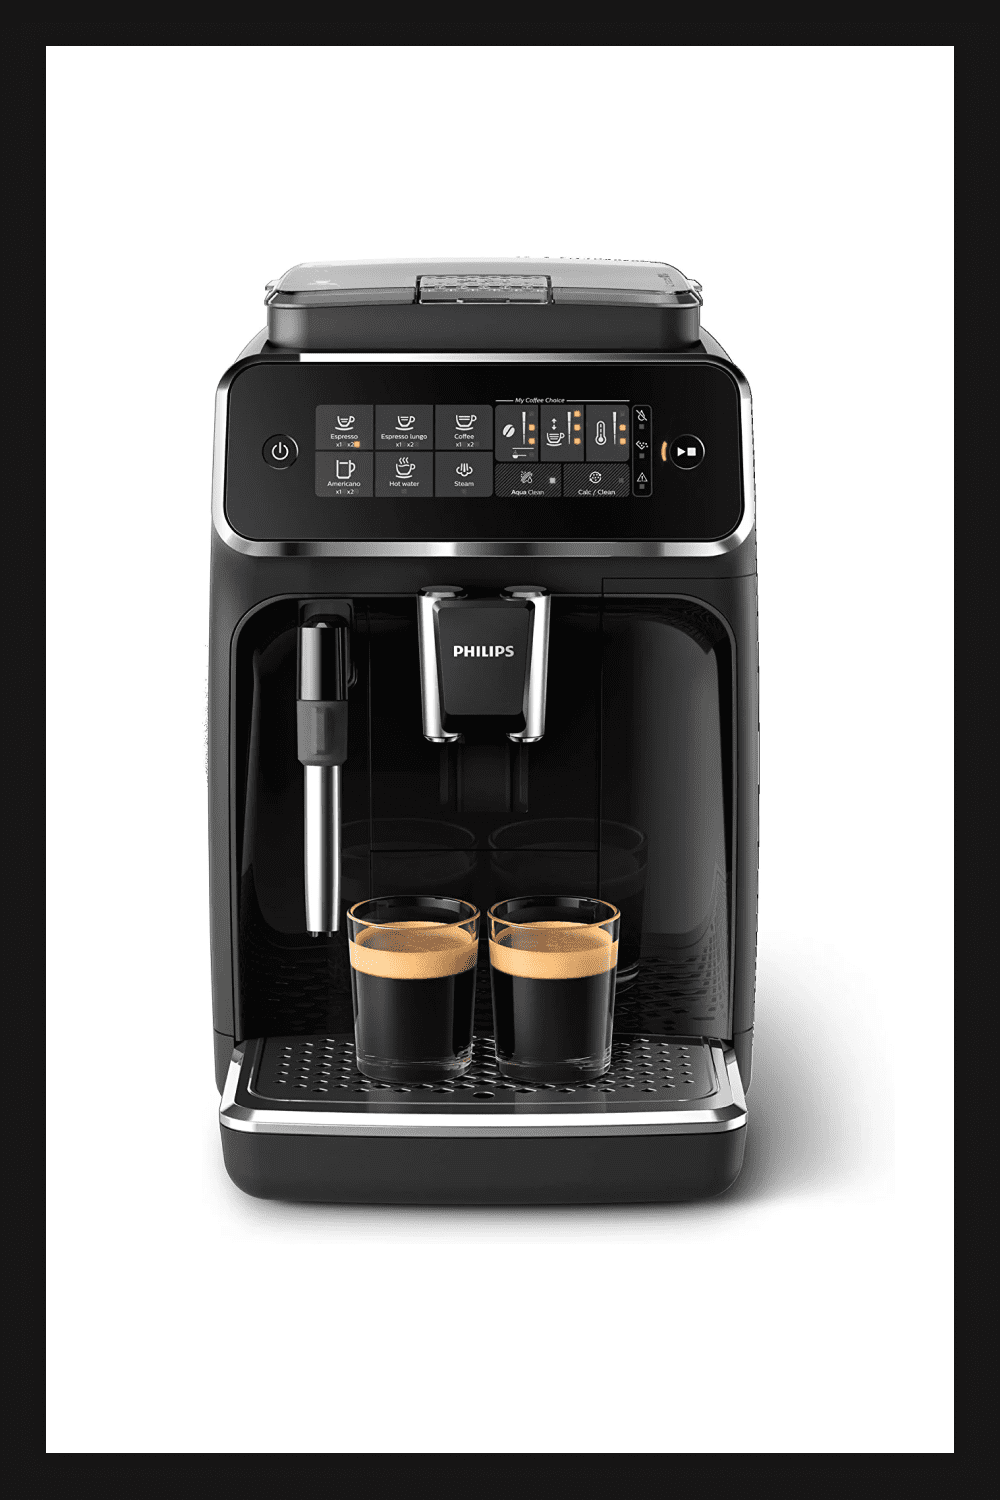 PHILIPS 3200 Series Fully Automatic Espresso Machine.